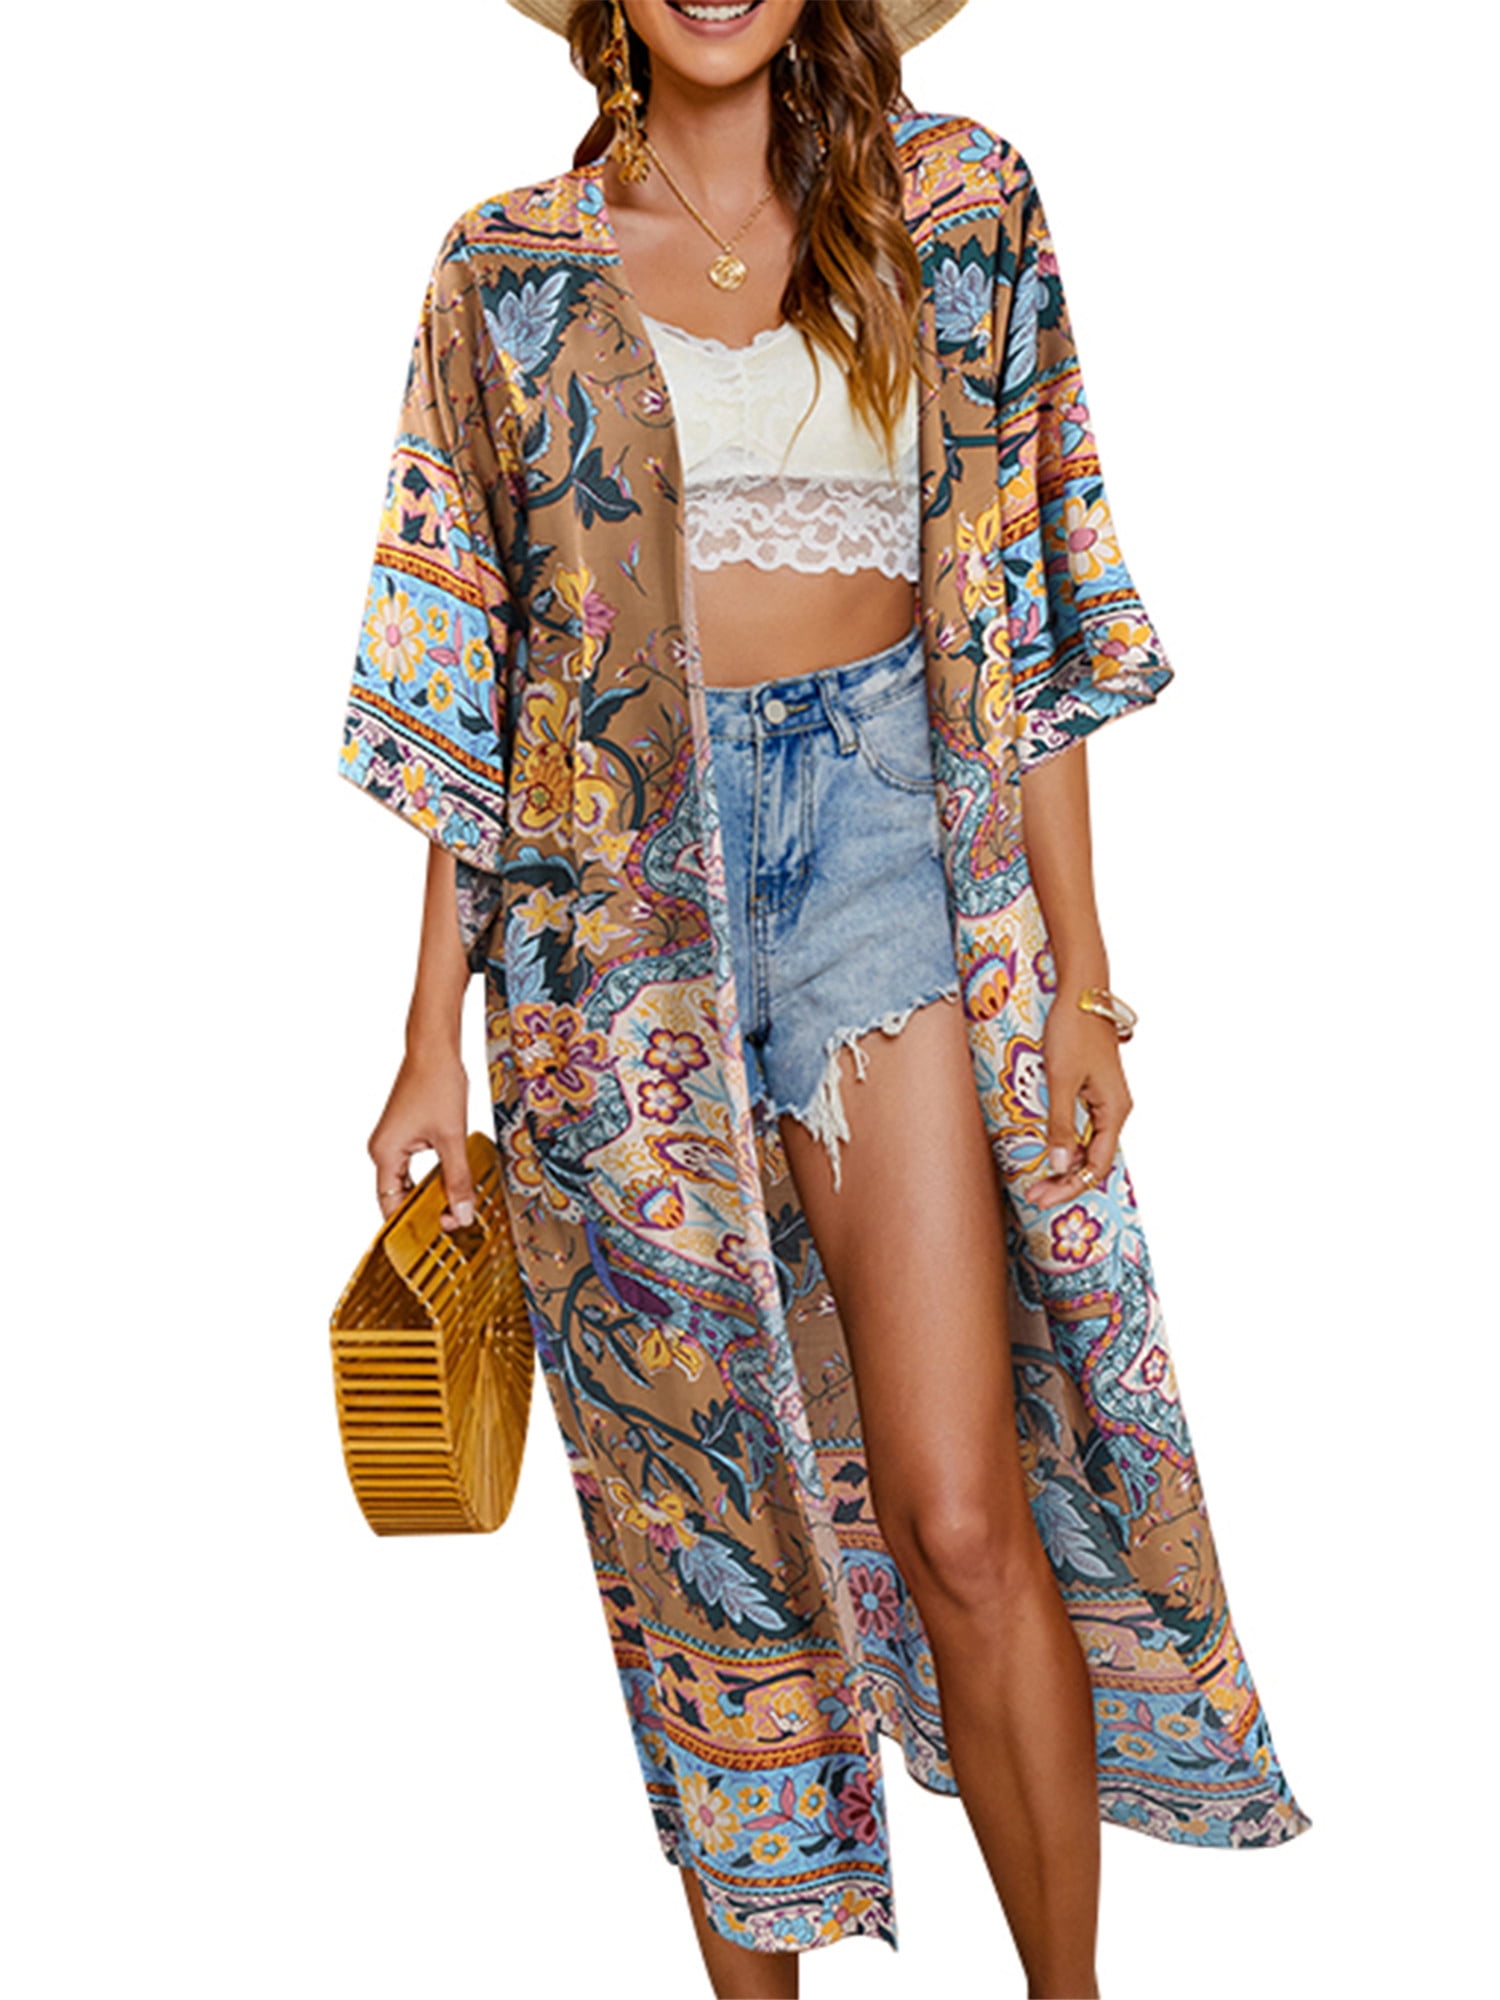 Orshoy Long Kimono Cardigan Rayon Beach Swimsuit Bikini Cover Up Summer Floral Long Maxi/Boho Dress